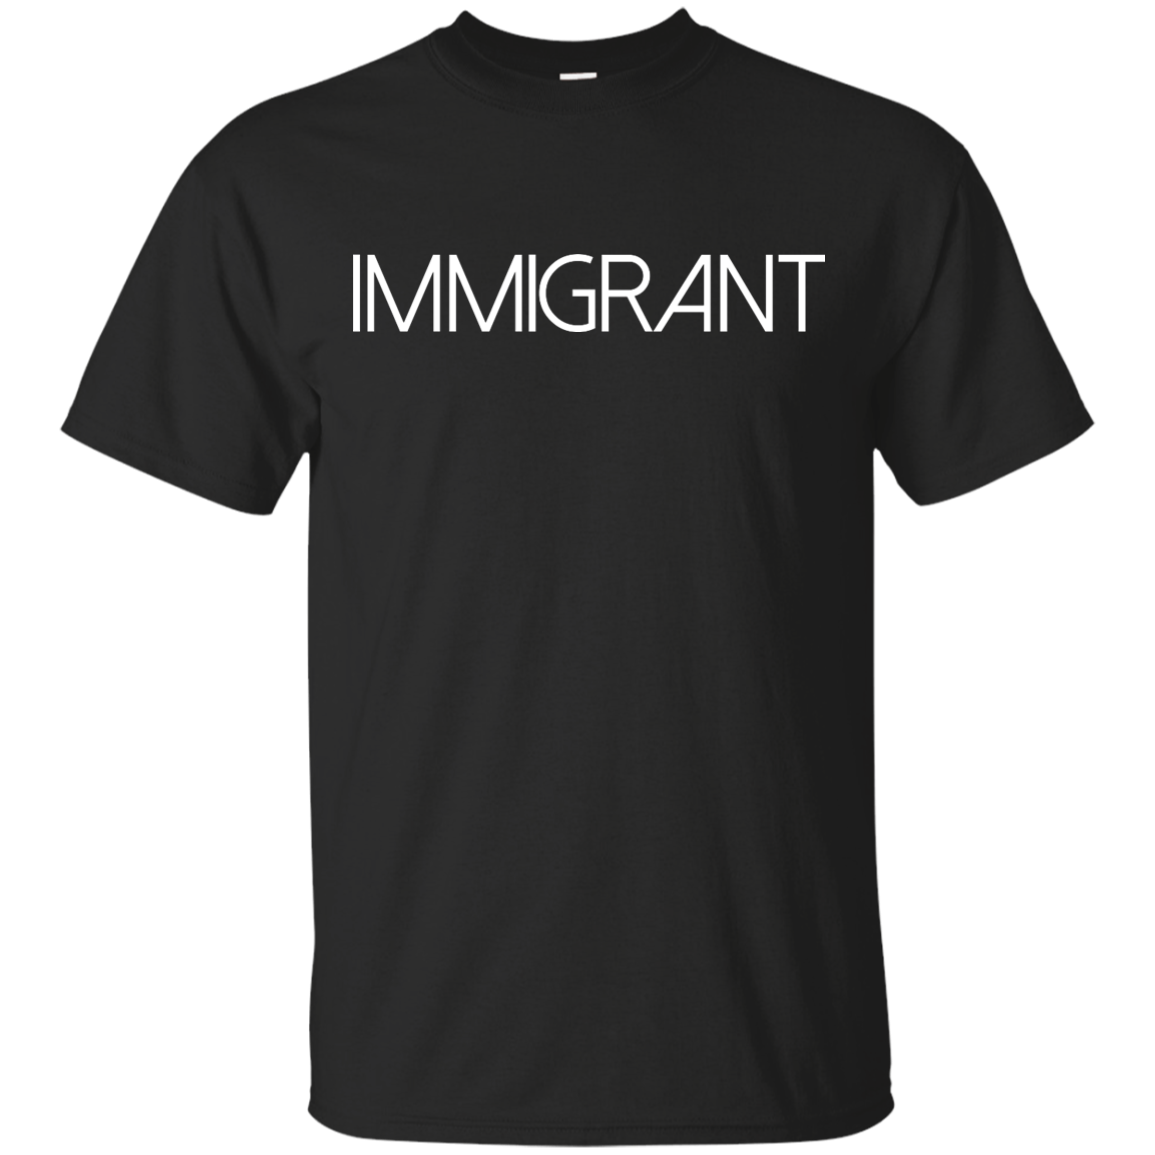 Immigrant shirt, sweatshirt, racerback